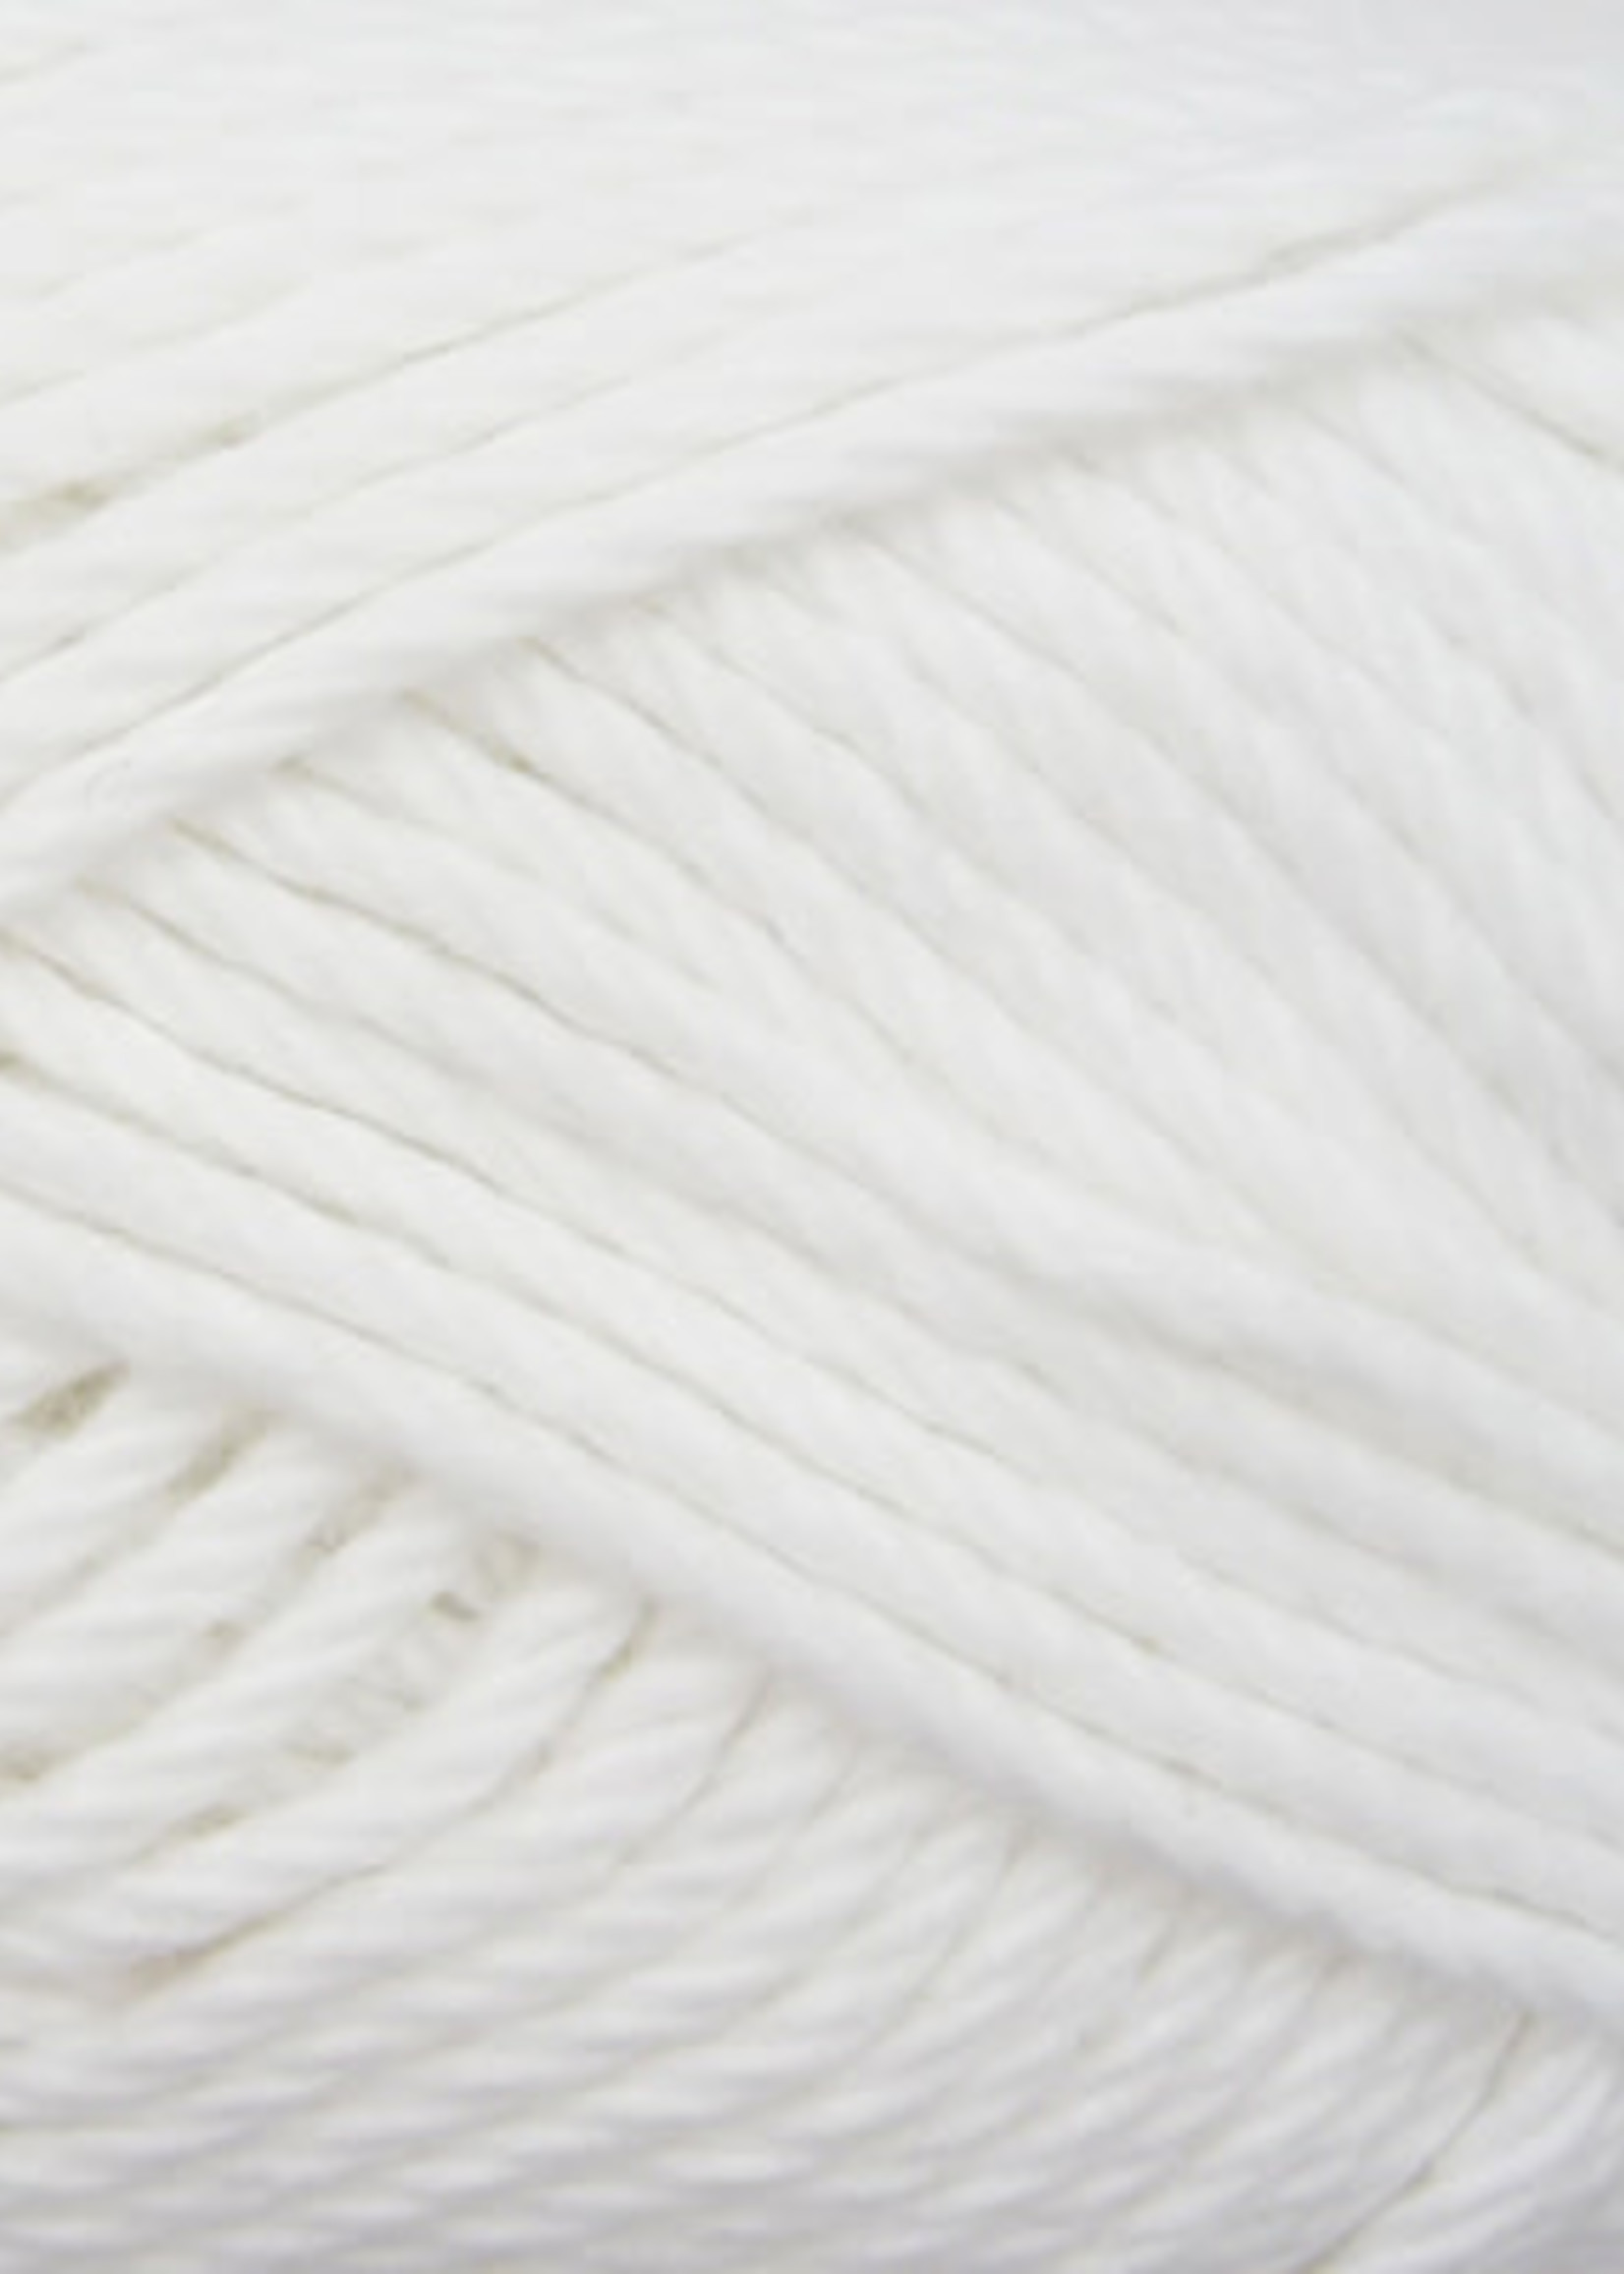 Estelle Yarns Sudz Cotton #53941 Bright White